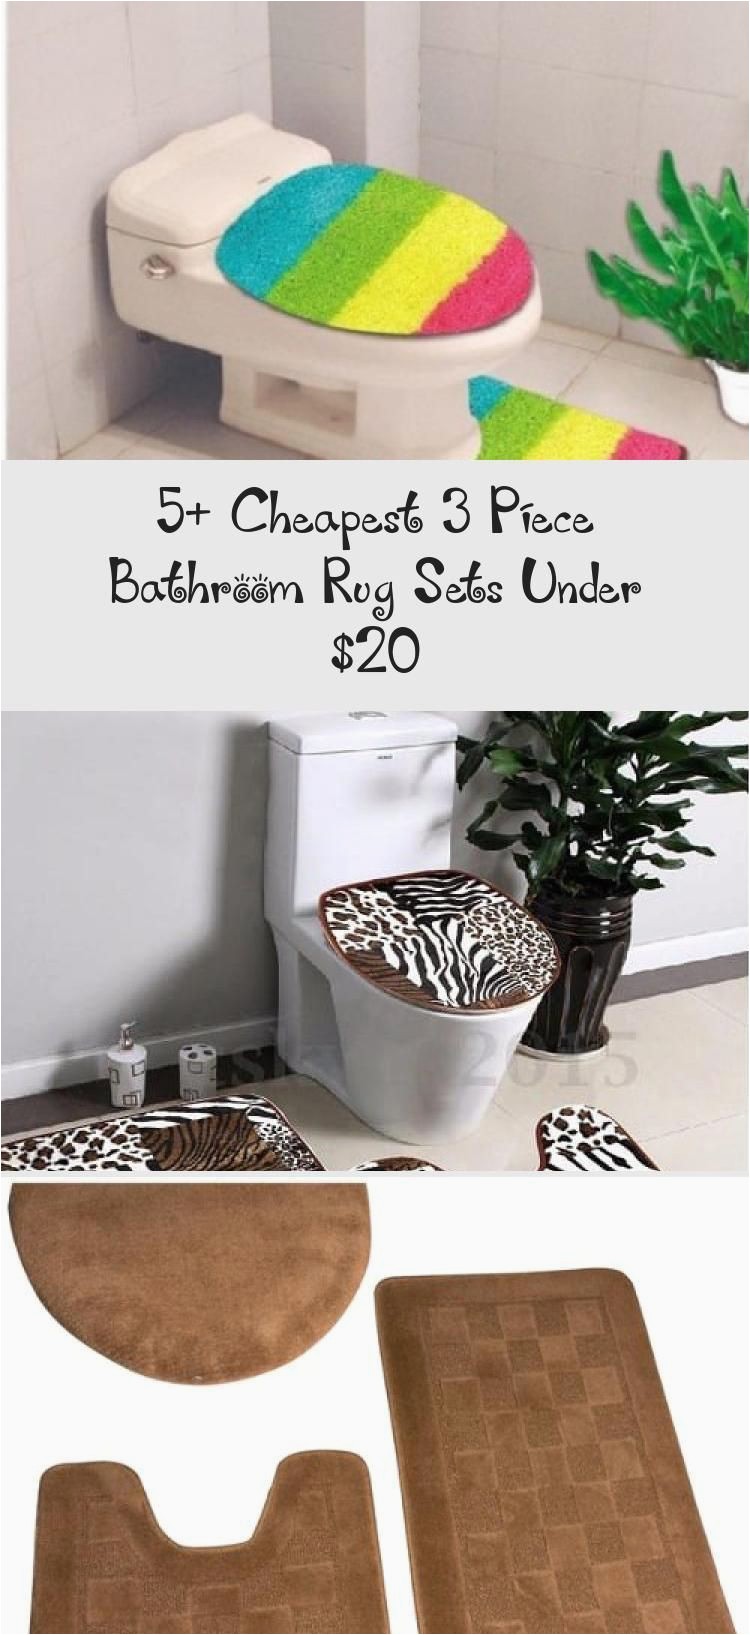 3 by 5 Bathroom Rugs 5 Cheapest 3 Piece Bathroom Rug Sets Under $20 Bathroom